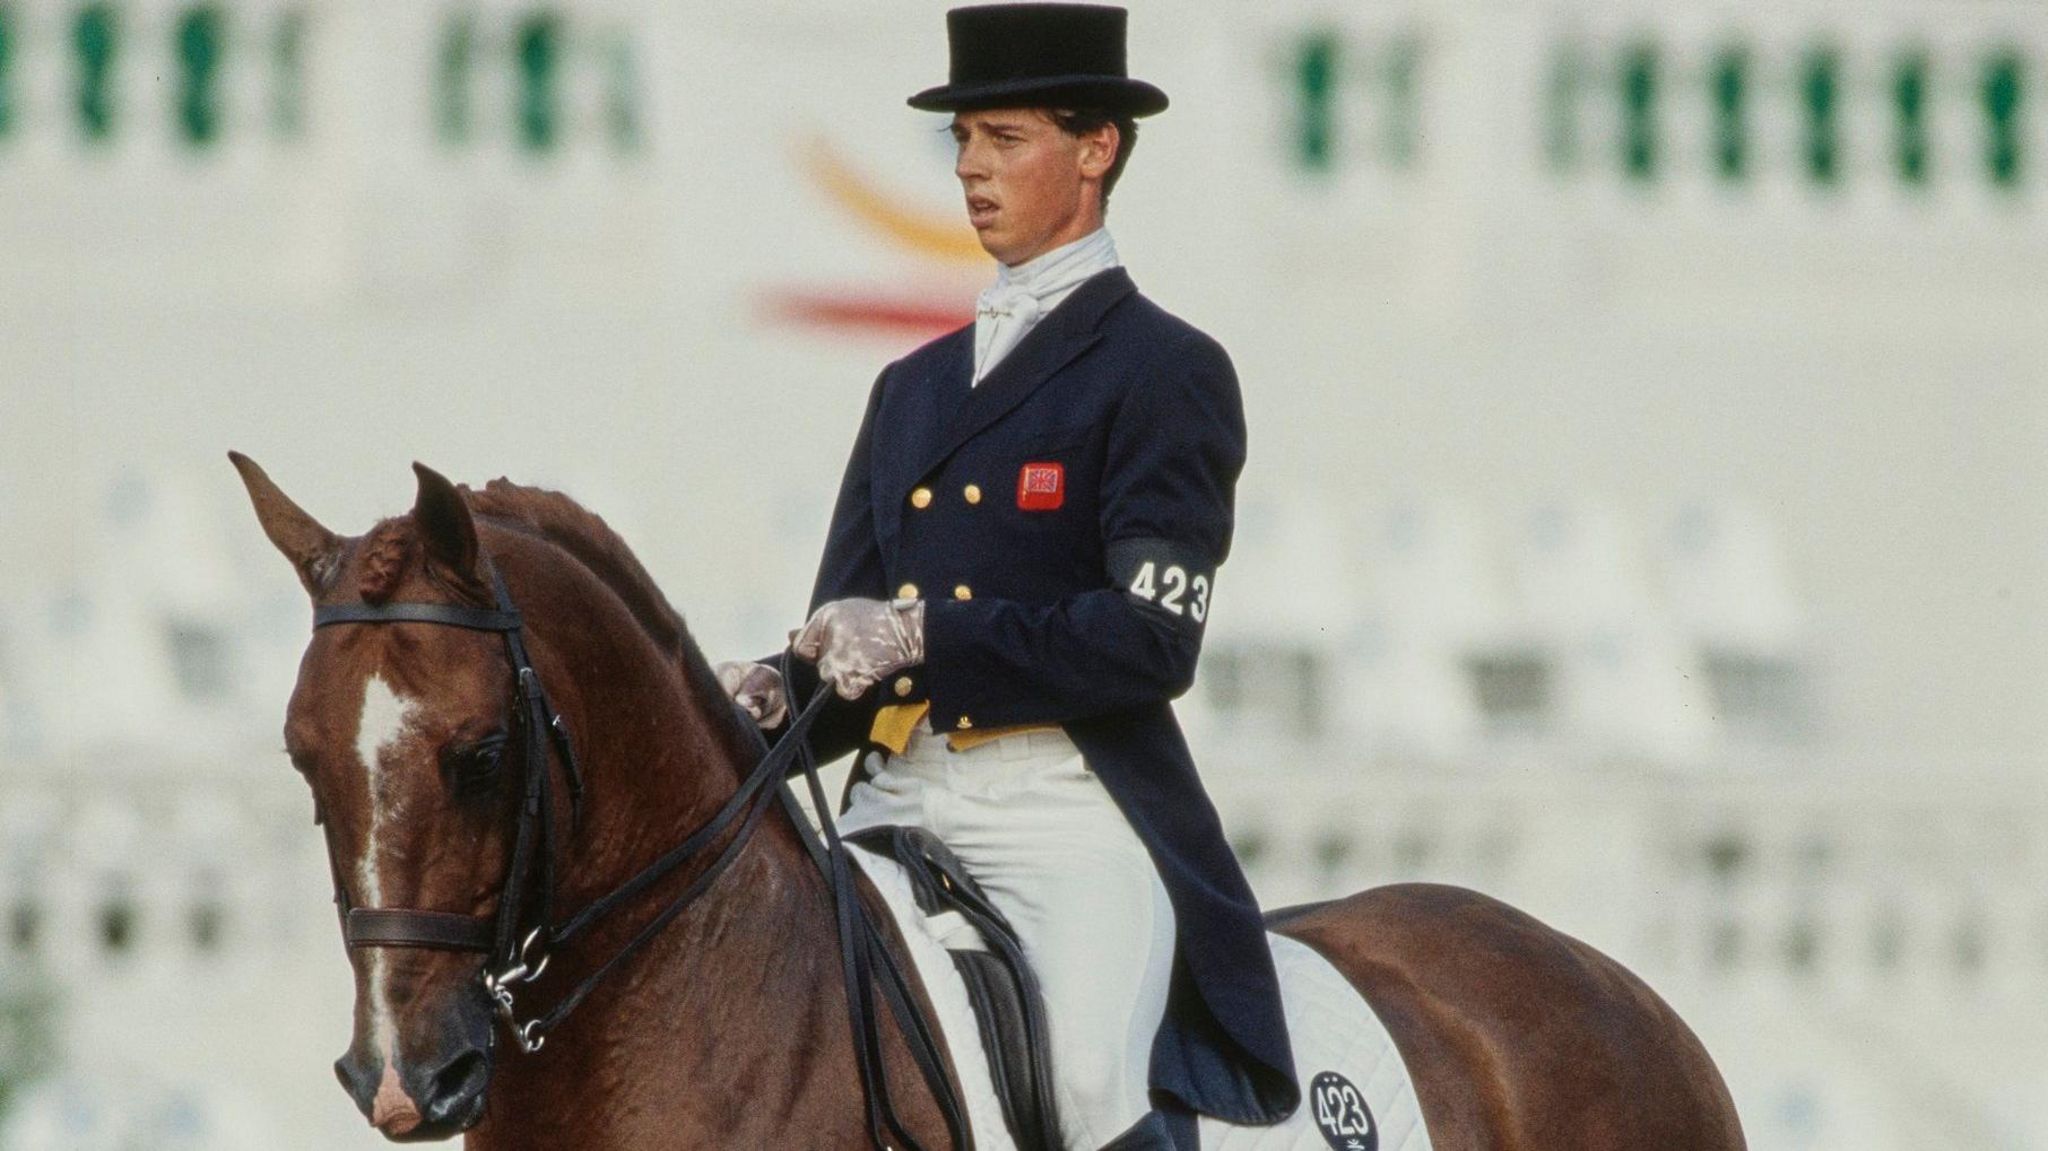 Carl Hester riding at Barcelona 1992